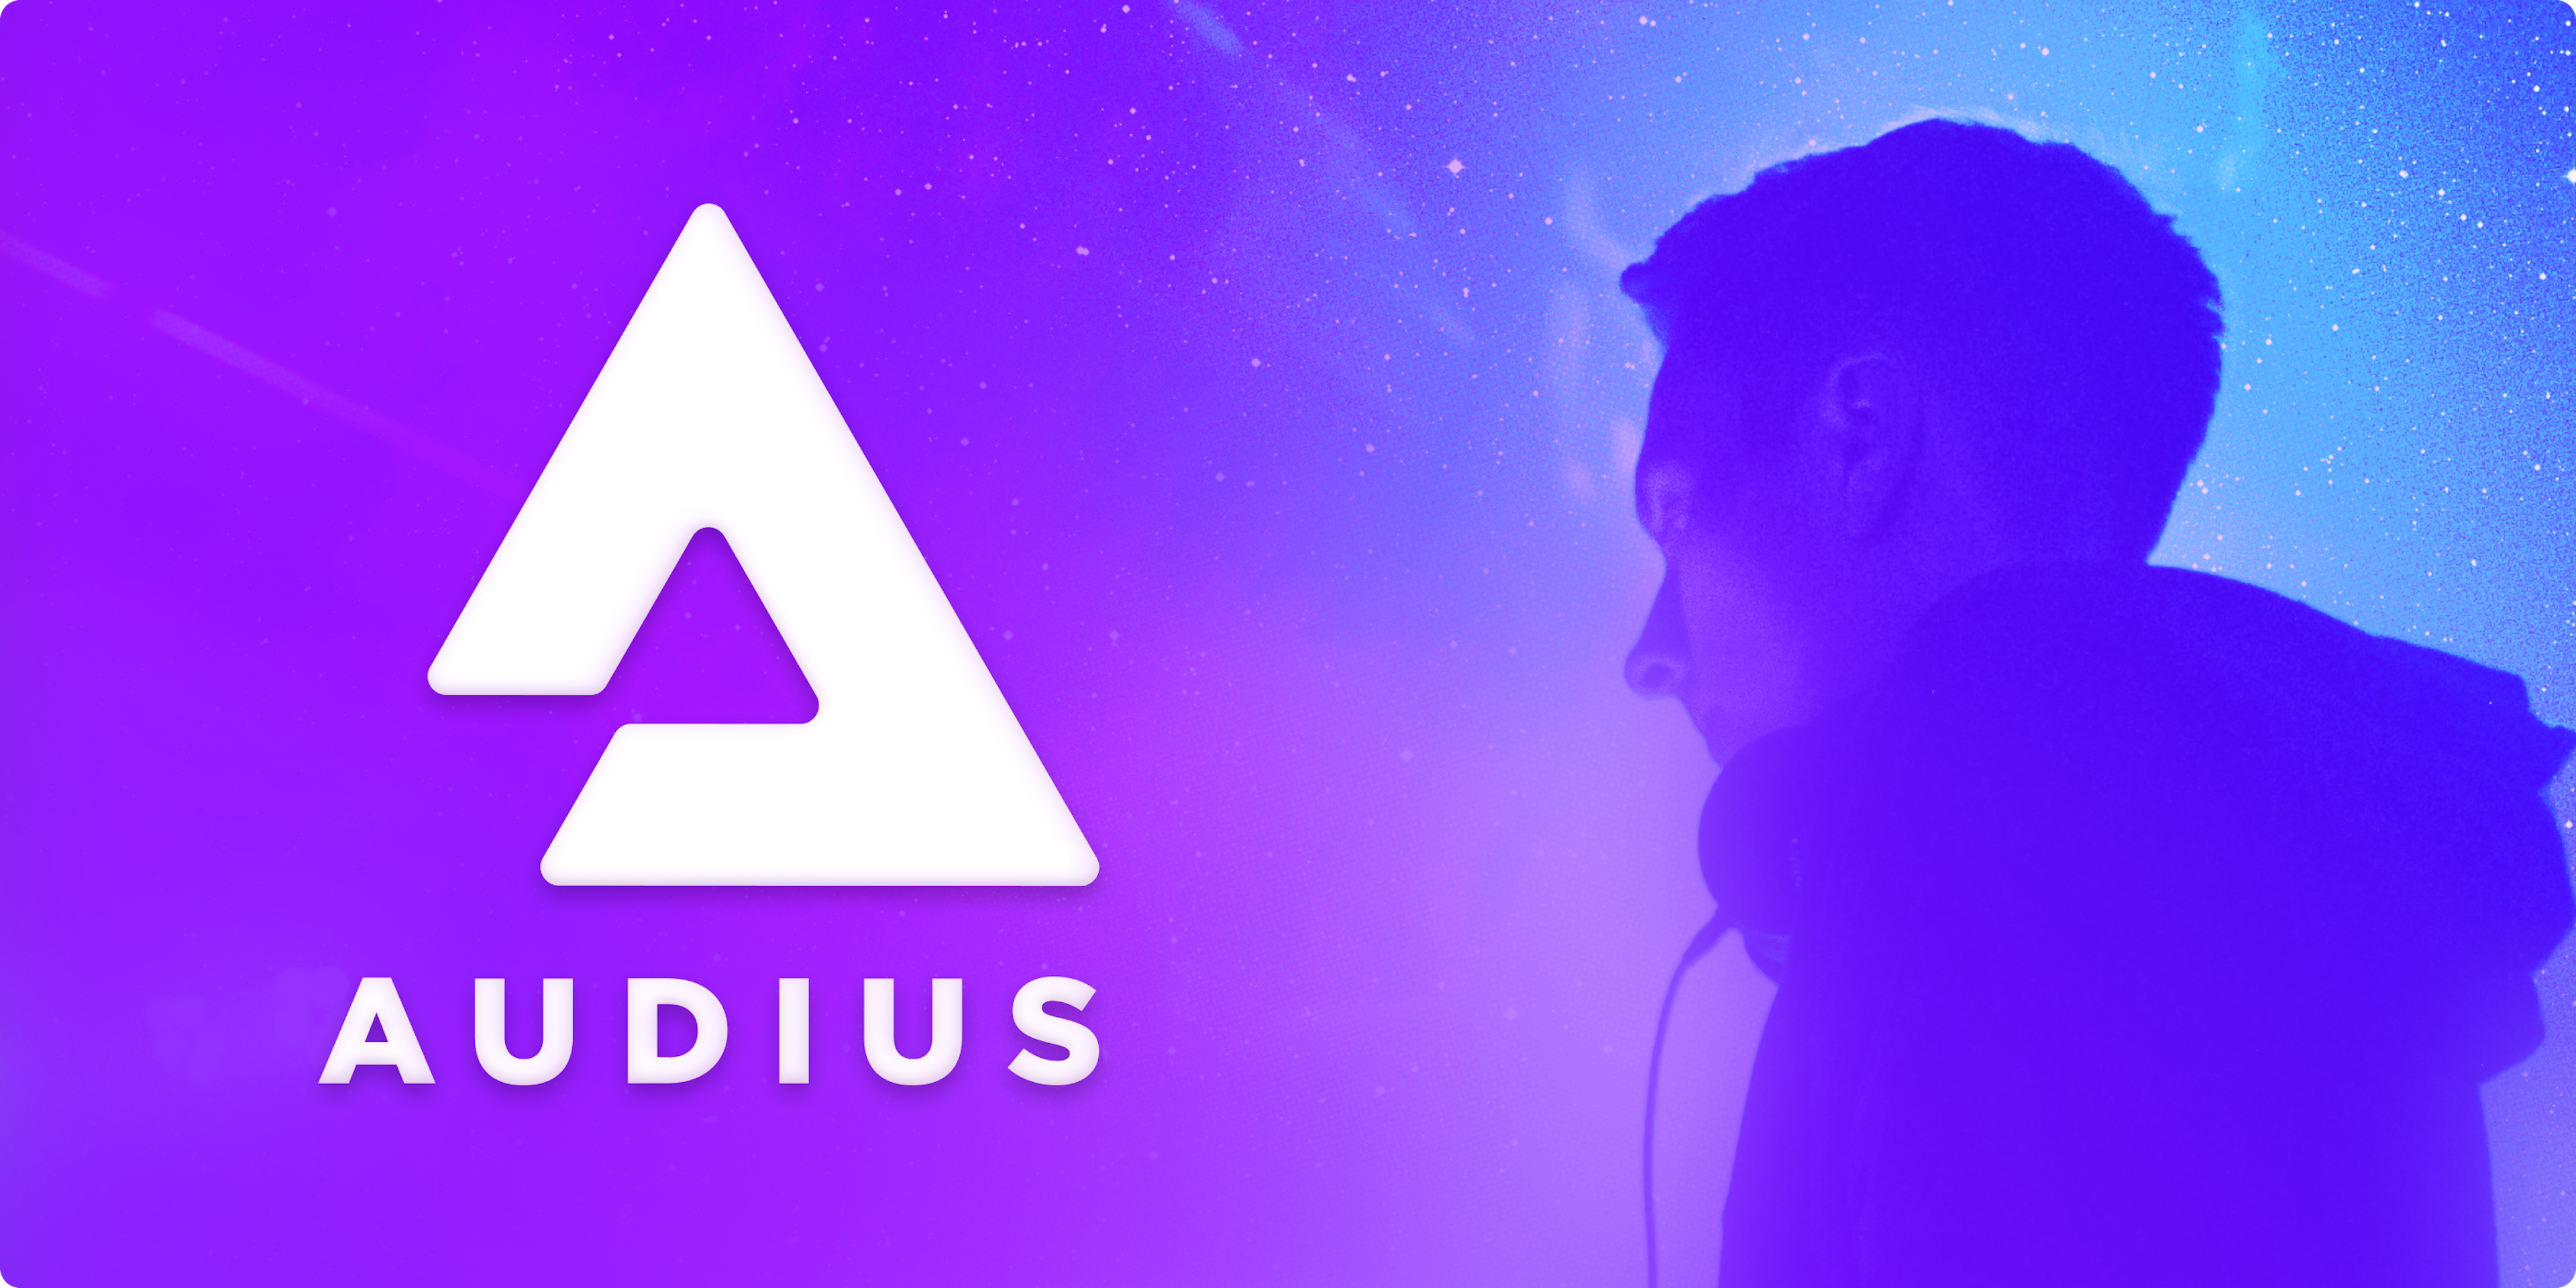 Working at Audius - Reimagine Music with Blockchain